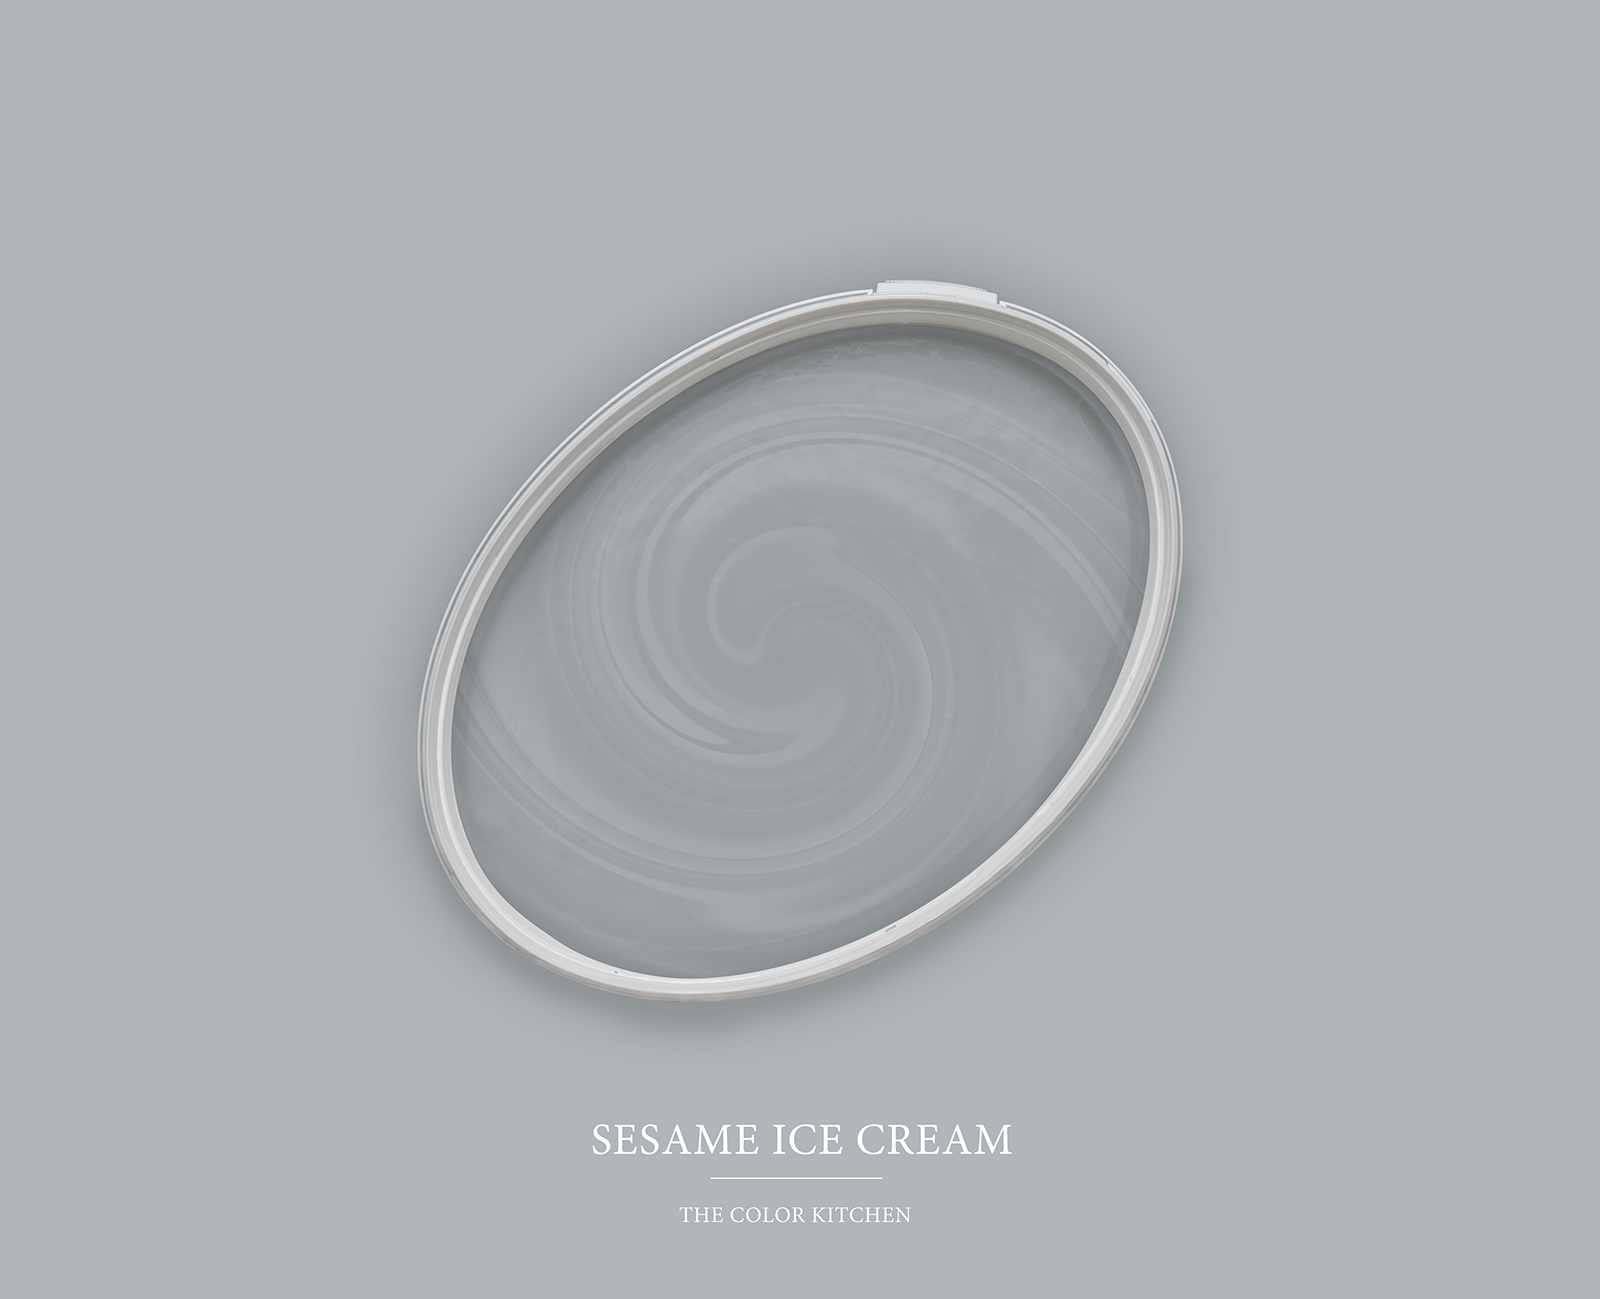         Wandfarbe TCK1005 »Sesame Ice Cream« in bläulichem Hellgrau – 2,5 Liter
    